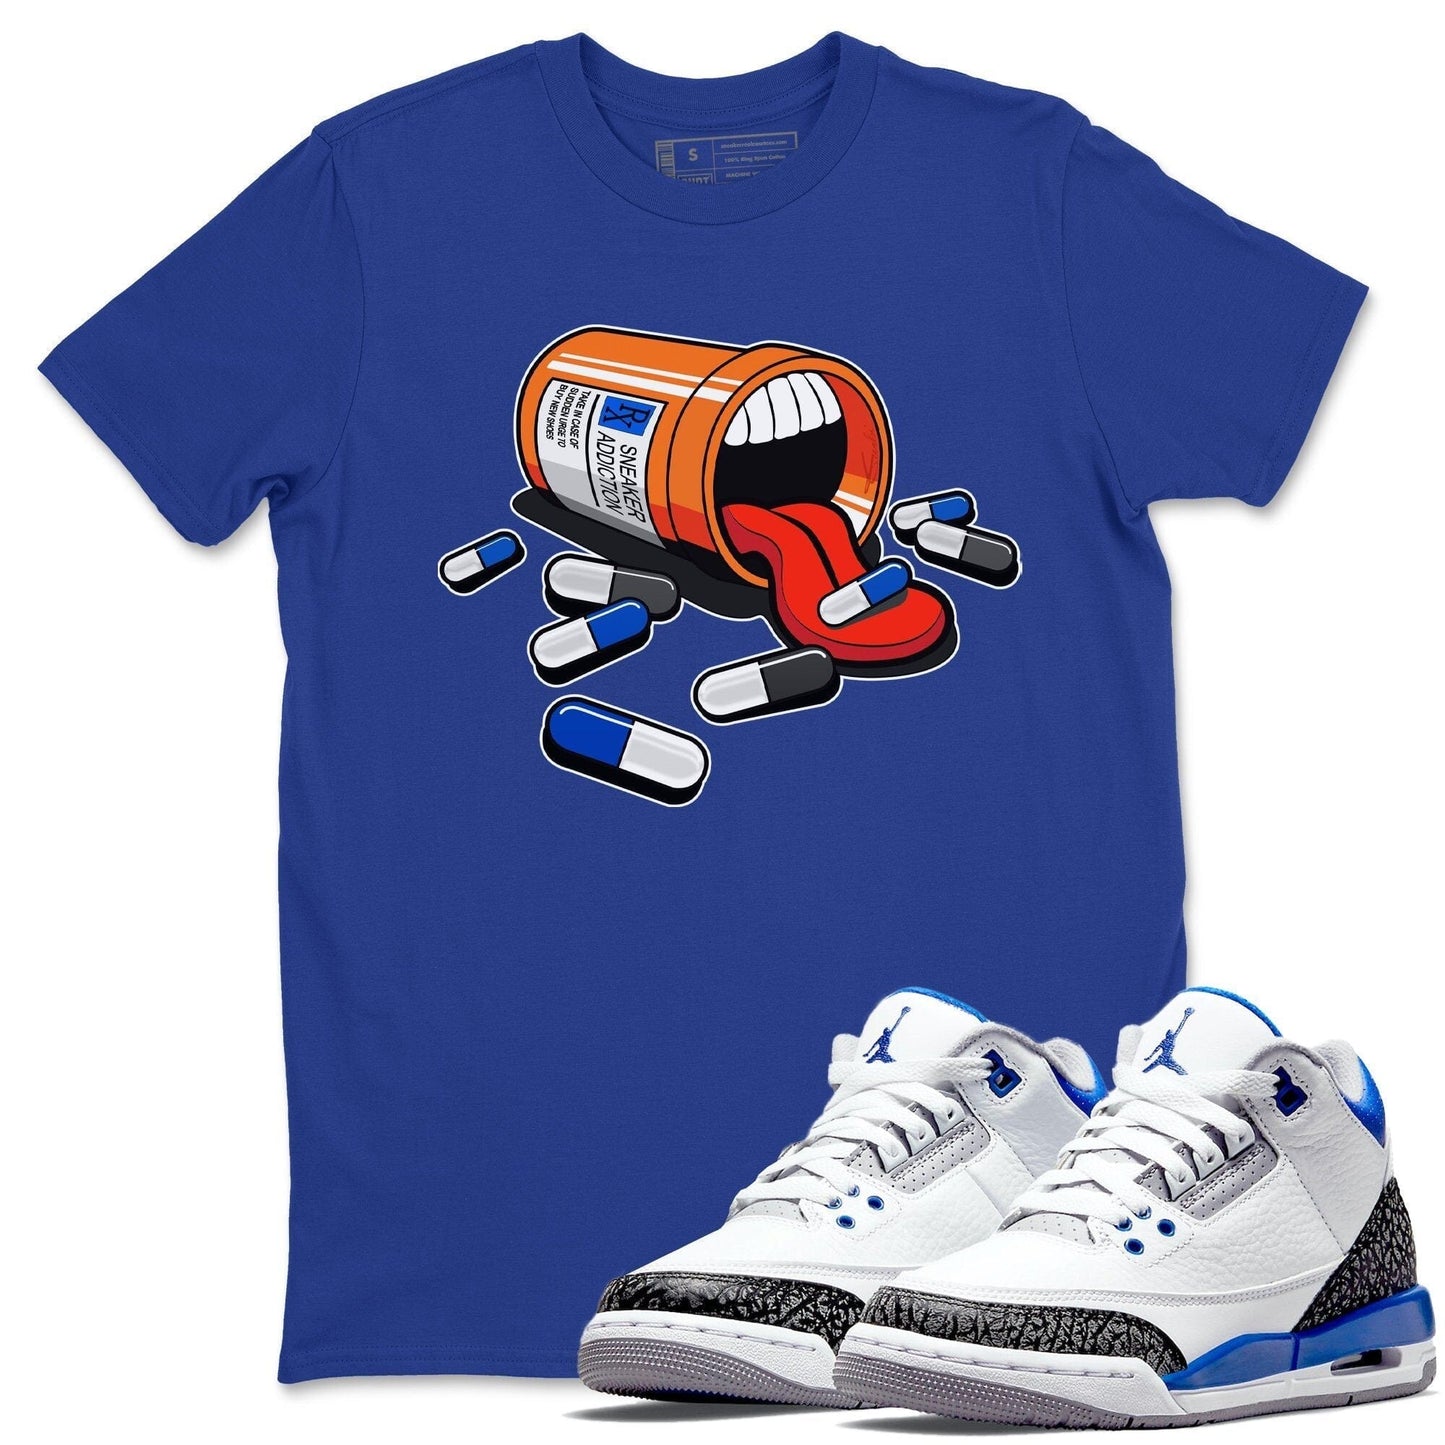 Jordan 3 Racer Blue Shirt To Match Jordans Sneaker Addiction Sneaker Tees Jordan 3 Racer Blue Drip Gear Zone Sneaker Matching Clothing Unisex Shirts